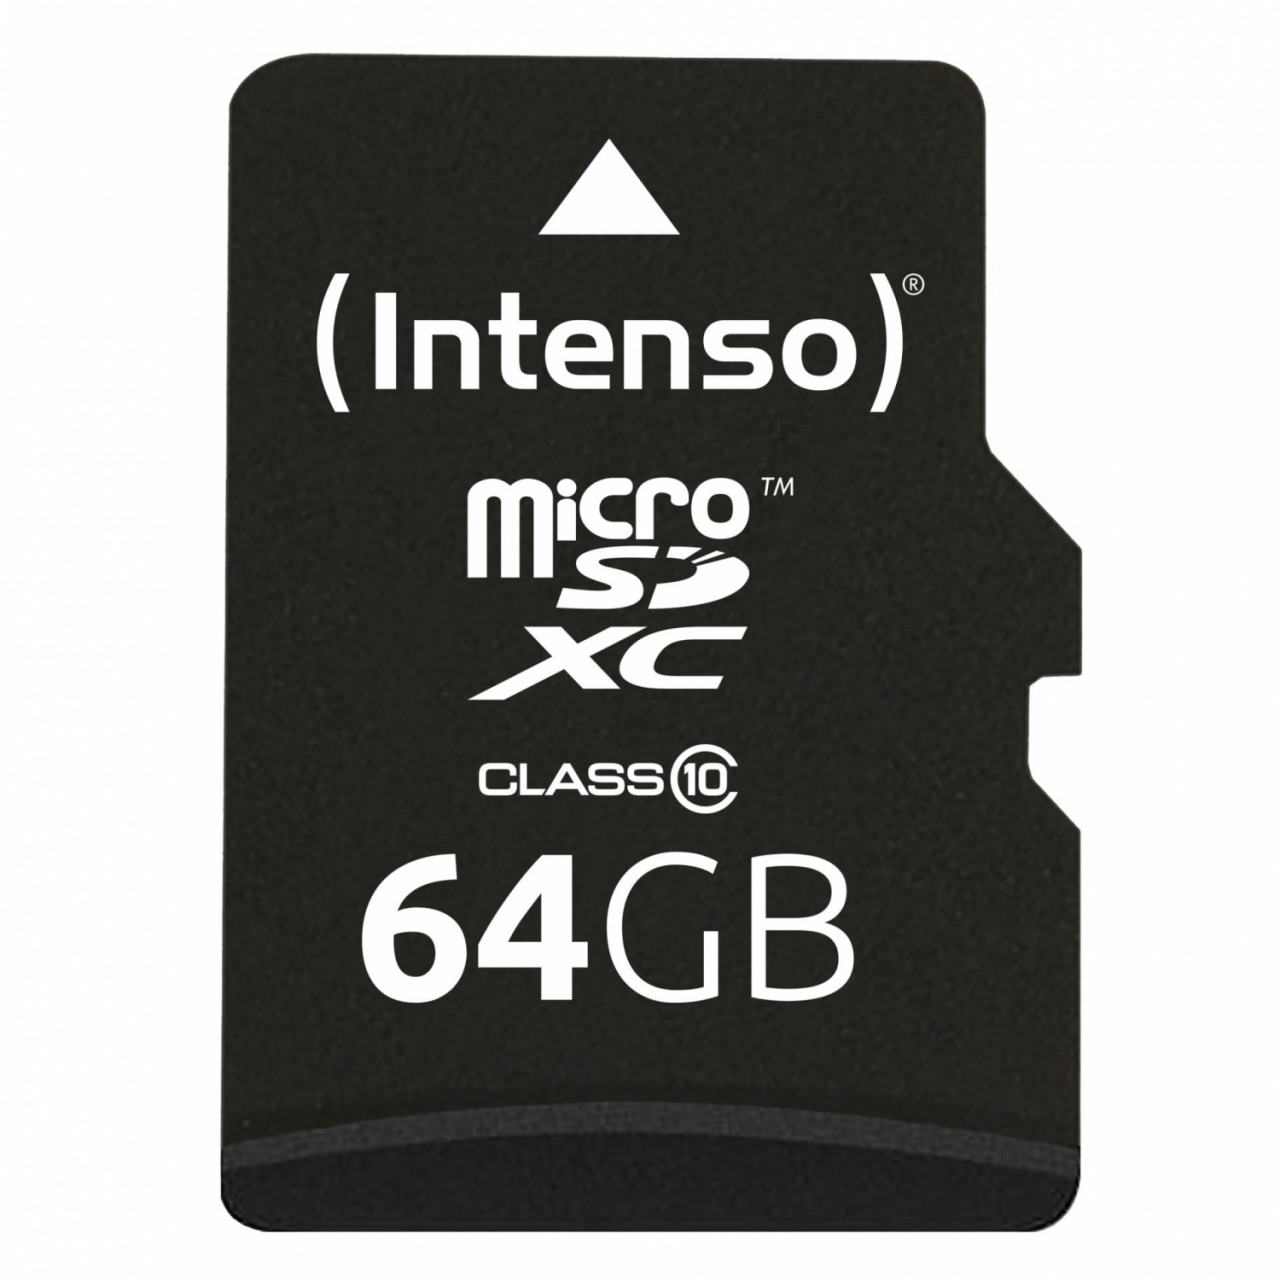 Intenso MICRO Secure Digital Cards Micro SD Class 10 64 GB